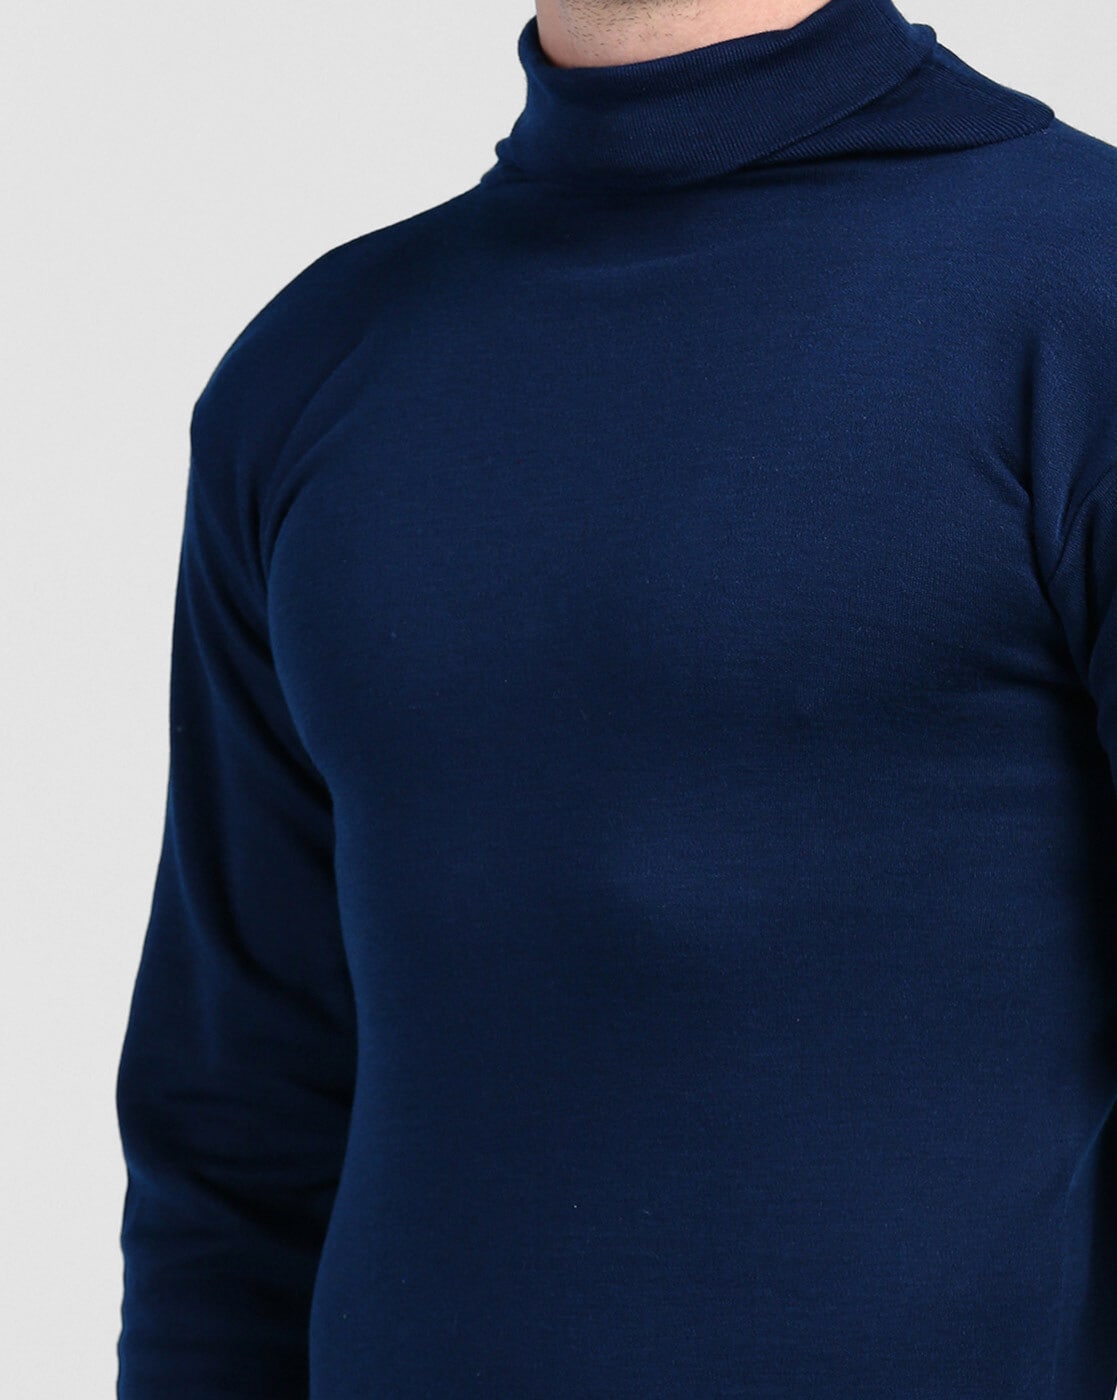 Navy Blue Woolen Rupa High Neck Thermal Wear, Unisex at best price